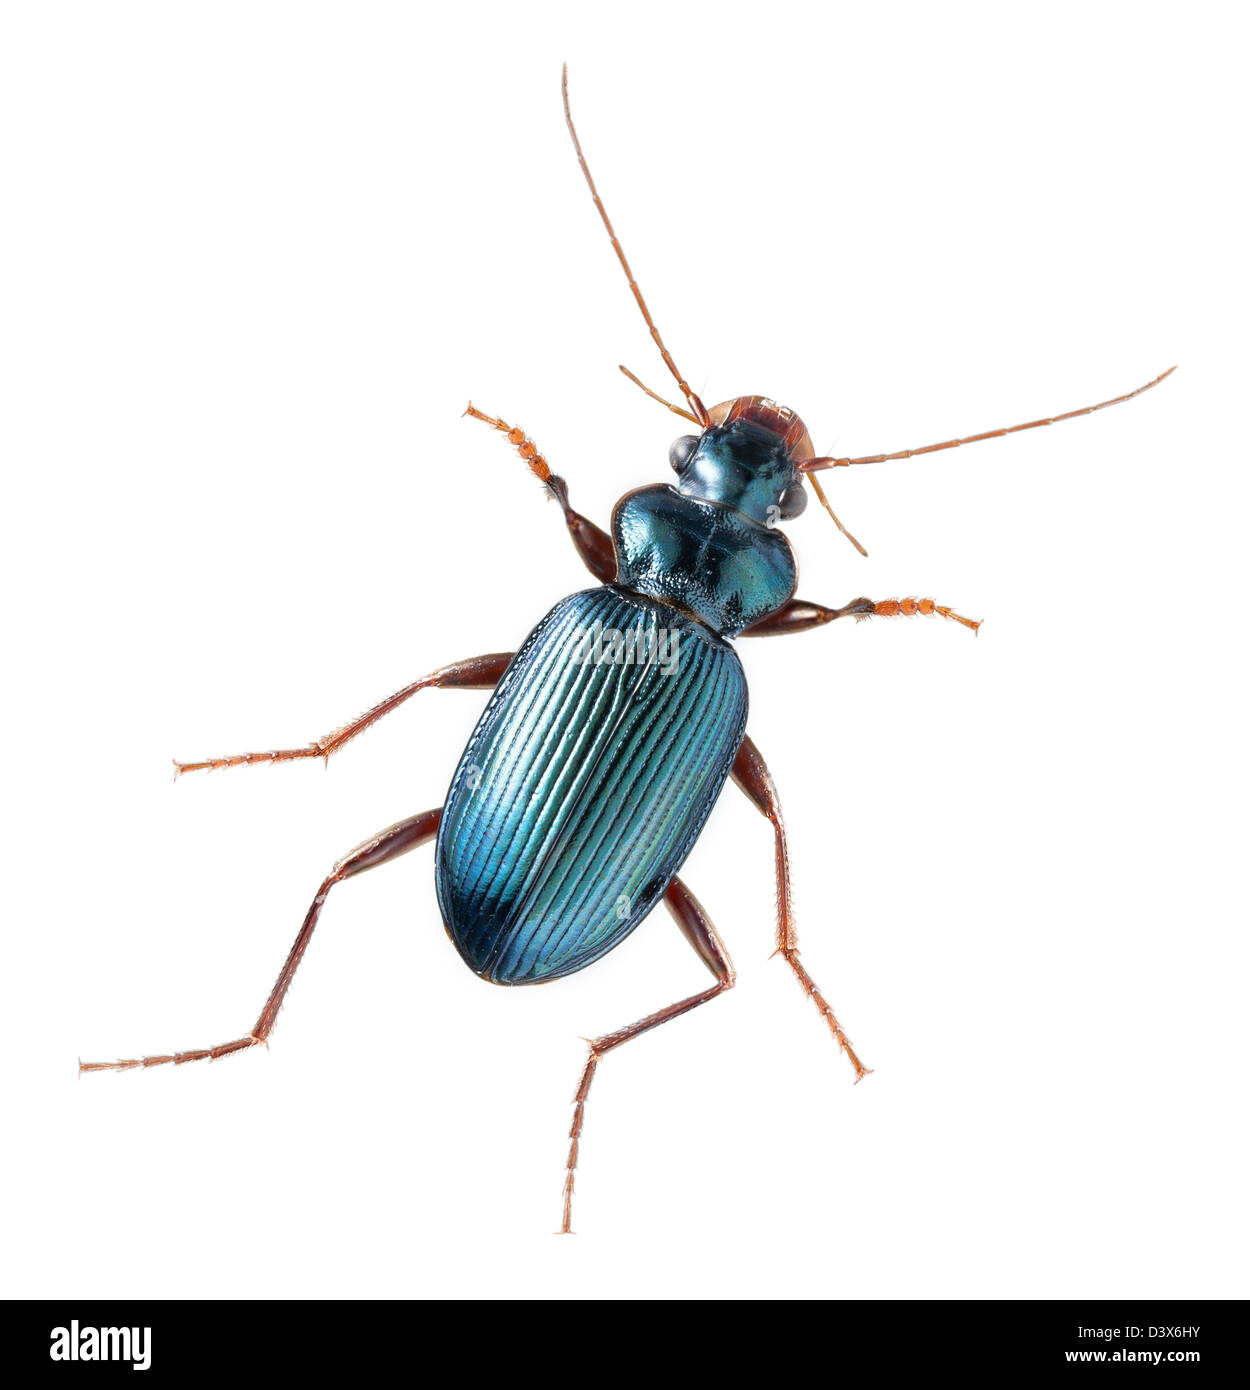 Massa beetle, Leistus fulvibarbis, corpo Iridescencent, ritagliata su sfondo bianco. Foto Stock